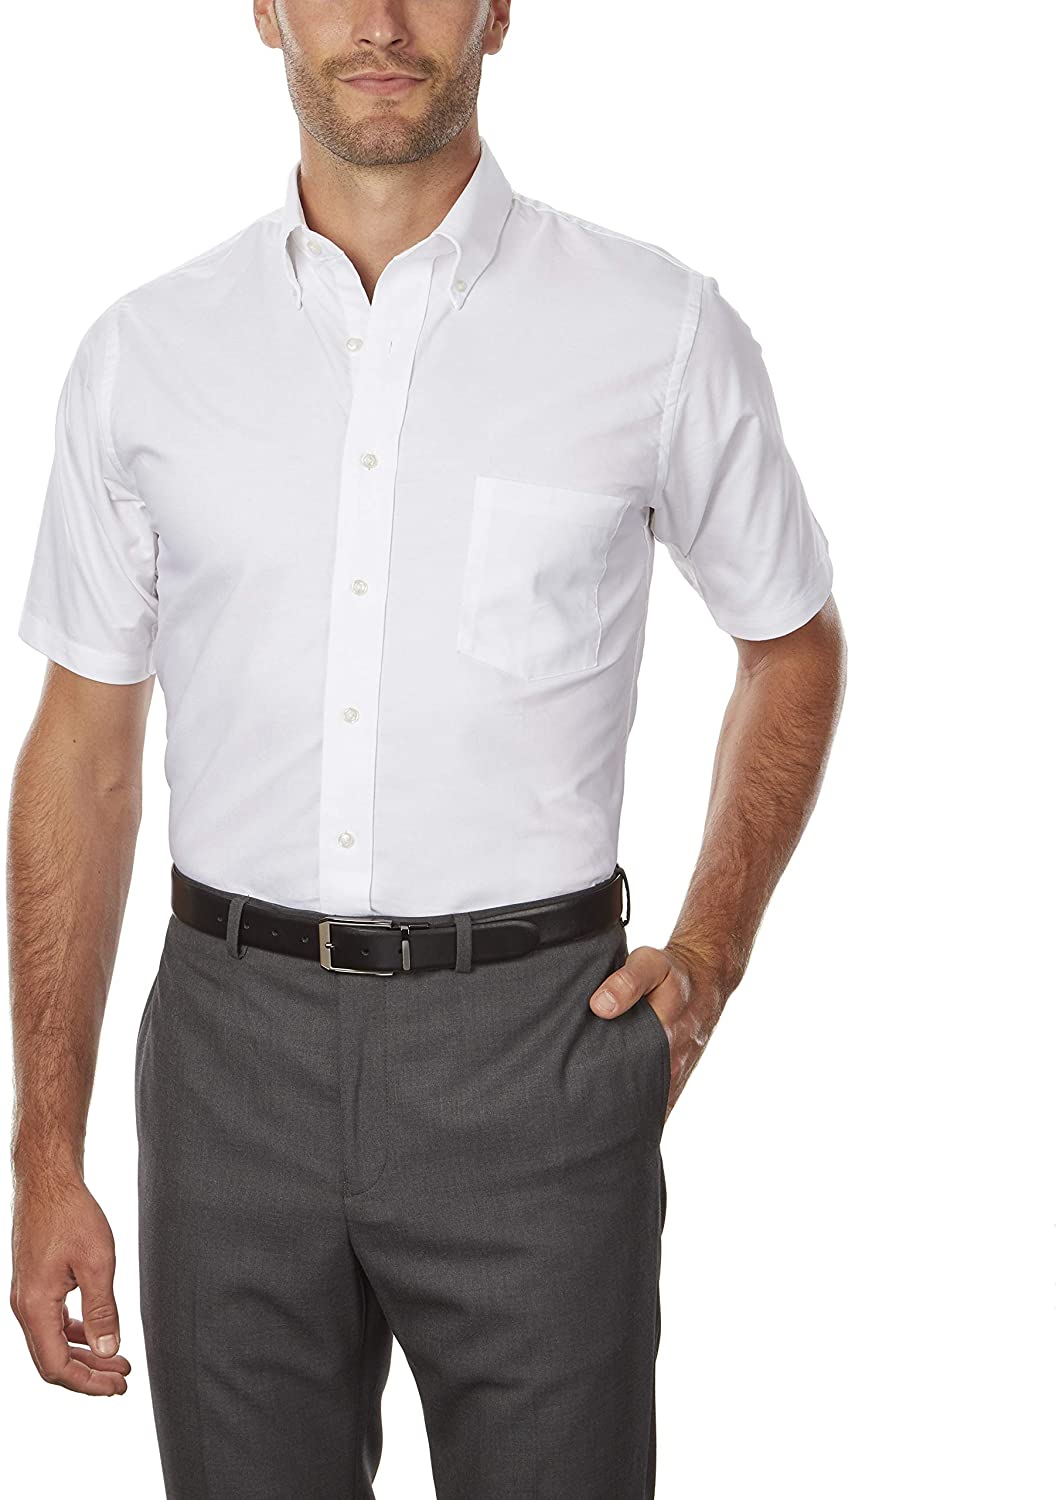 Men's Short Sleeve Dress Shirt Regular Fit Oxford, White, Size Small | eBay